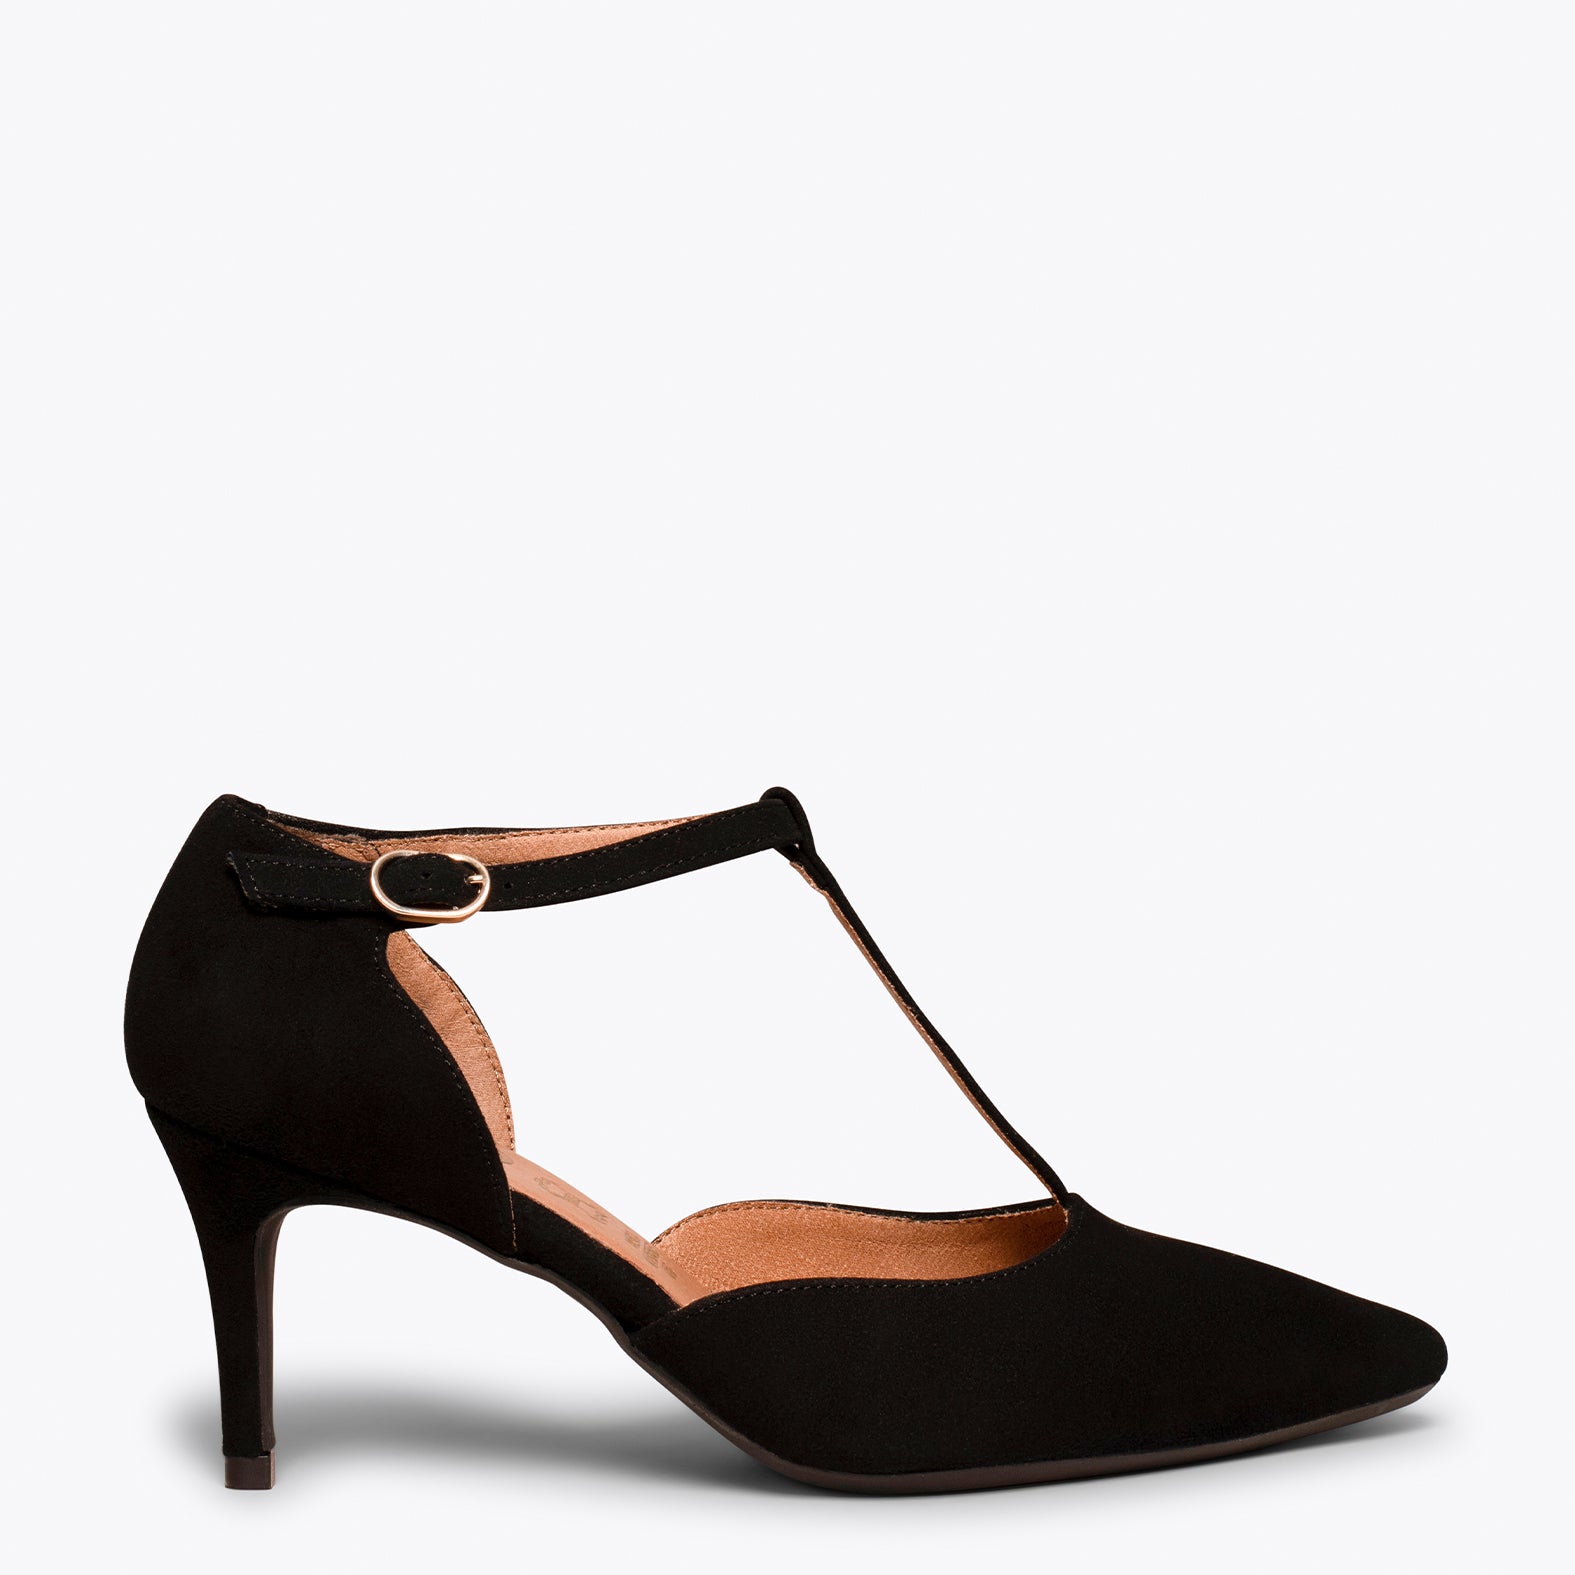 COCKTAIL – BLACK elegant mid heel shoes